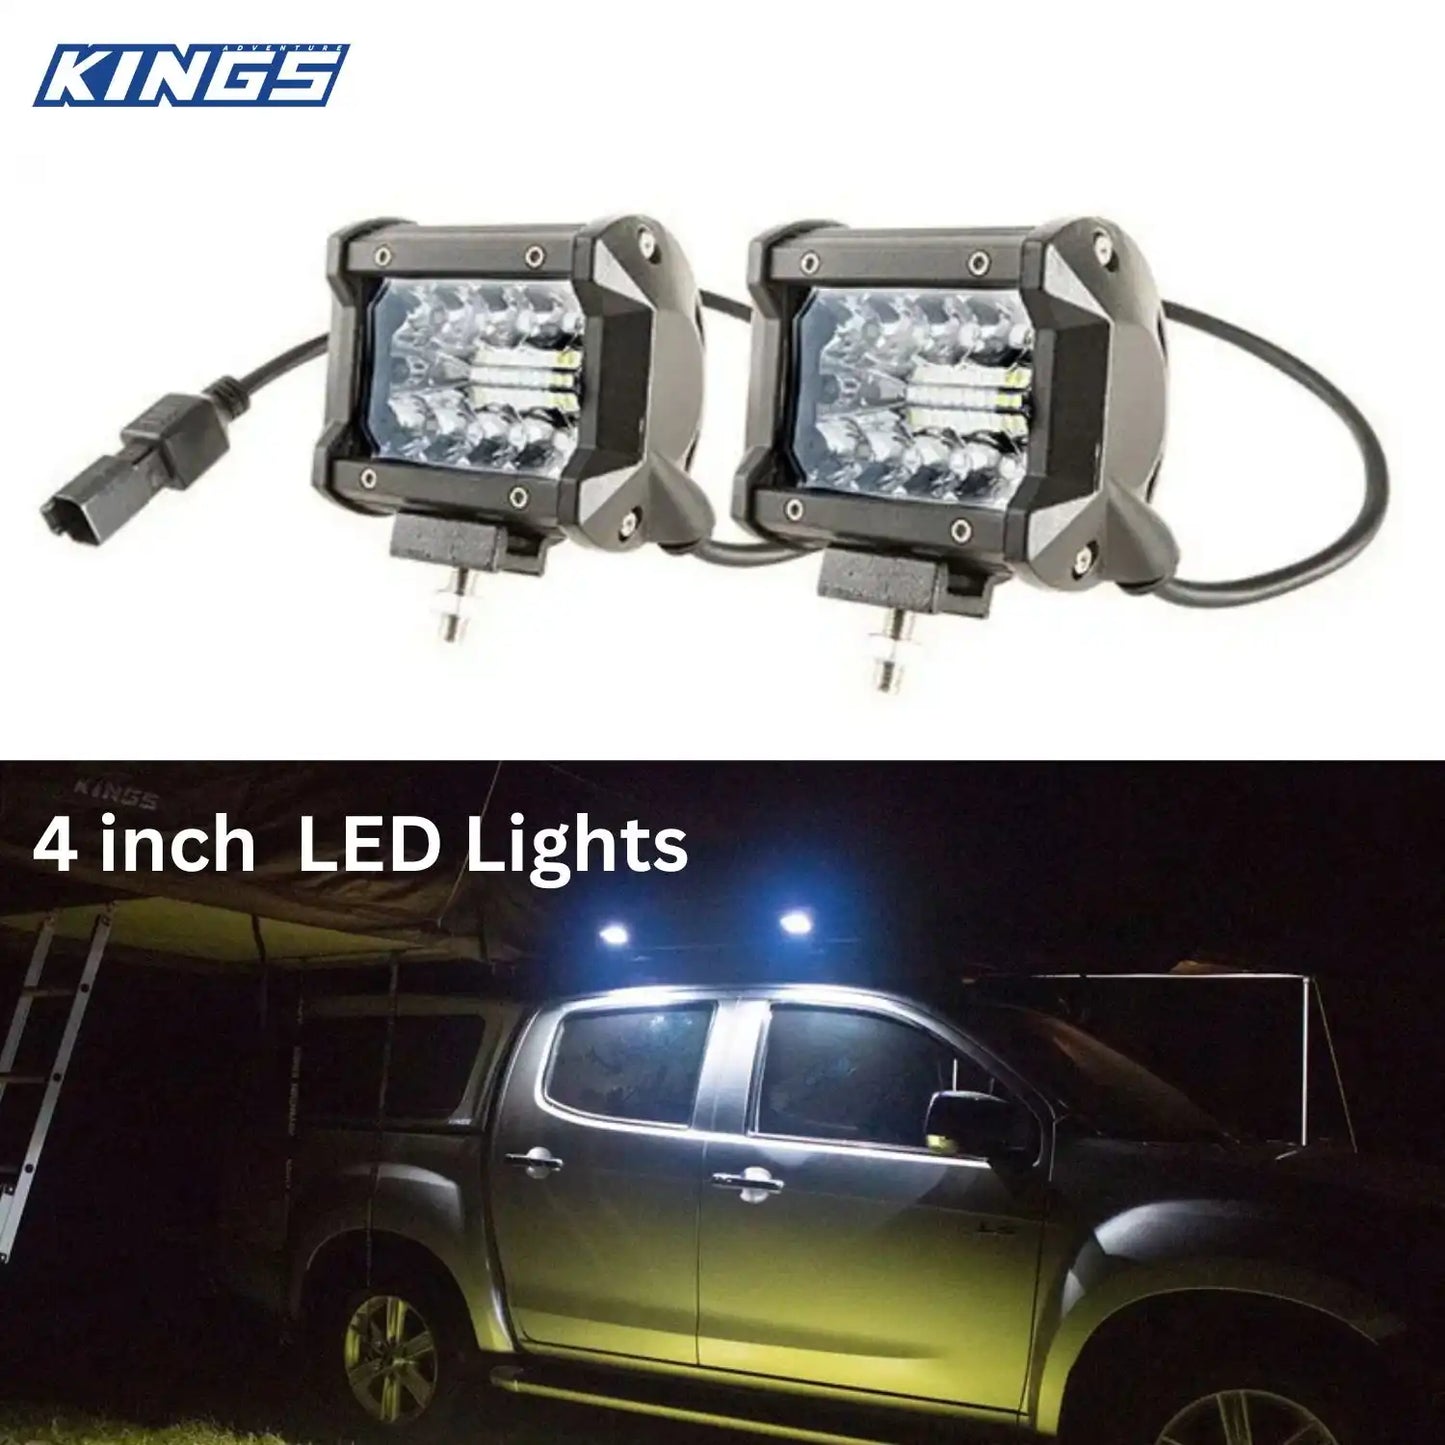 Adventure Kings 4 inch LED Light Bar (Pair) | Pod Lights 